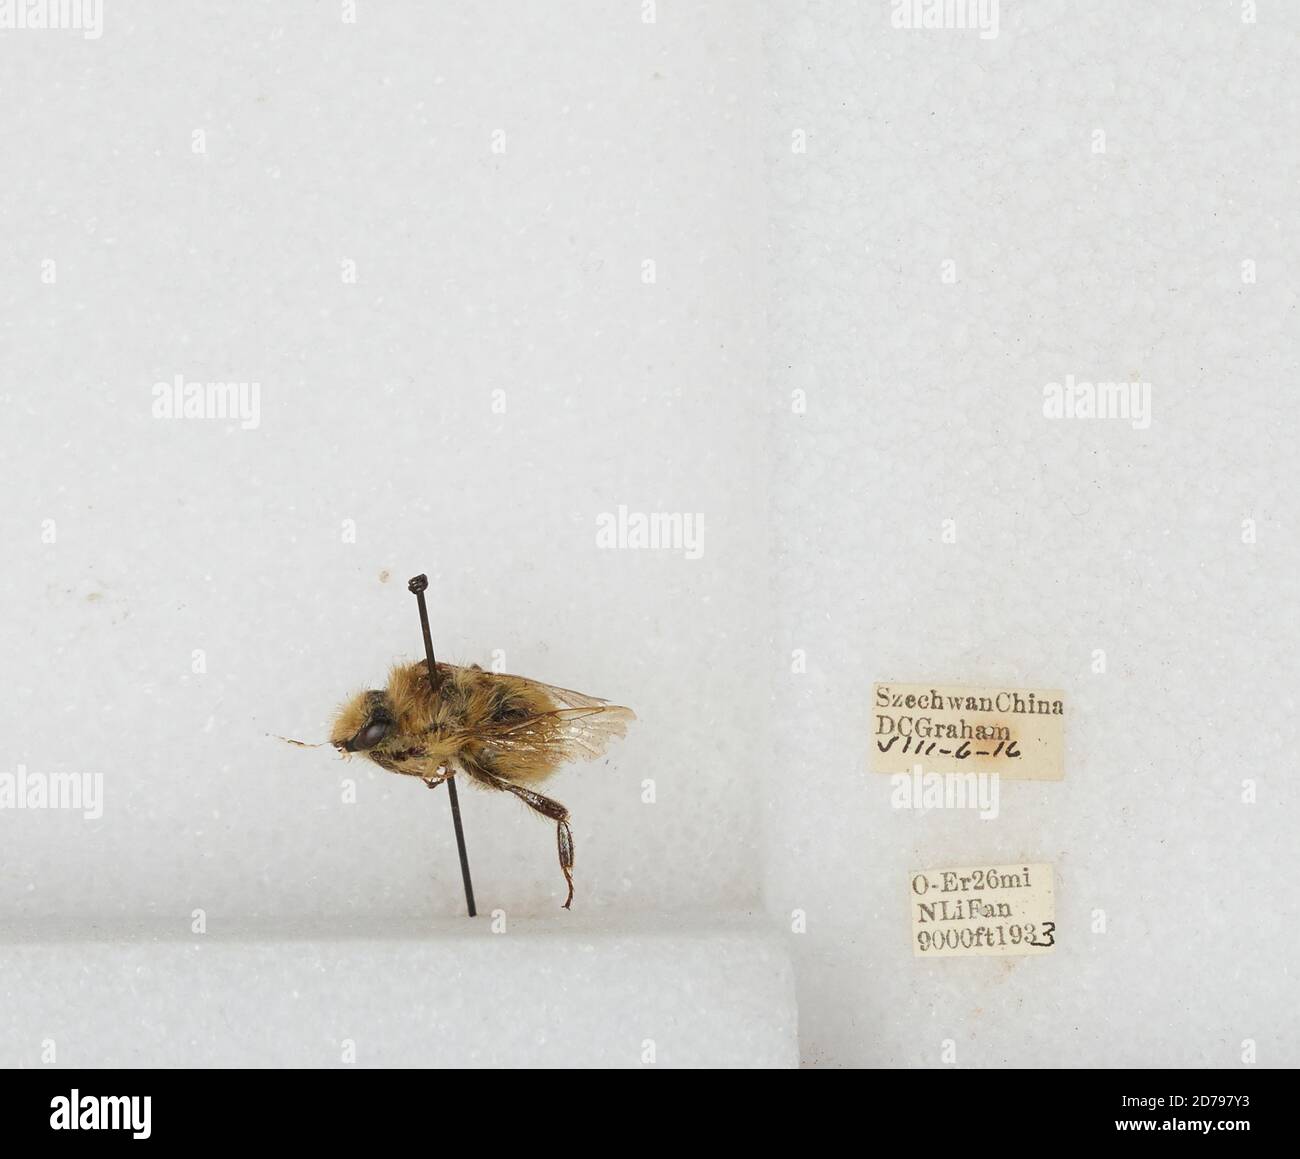 O-Er 26 mi N Li Fan, Sichuan, China, Bombus sp., Animalia, Arthropoda, Insecta, Hymenoptera, Apidae, Apinae Stock Photo